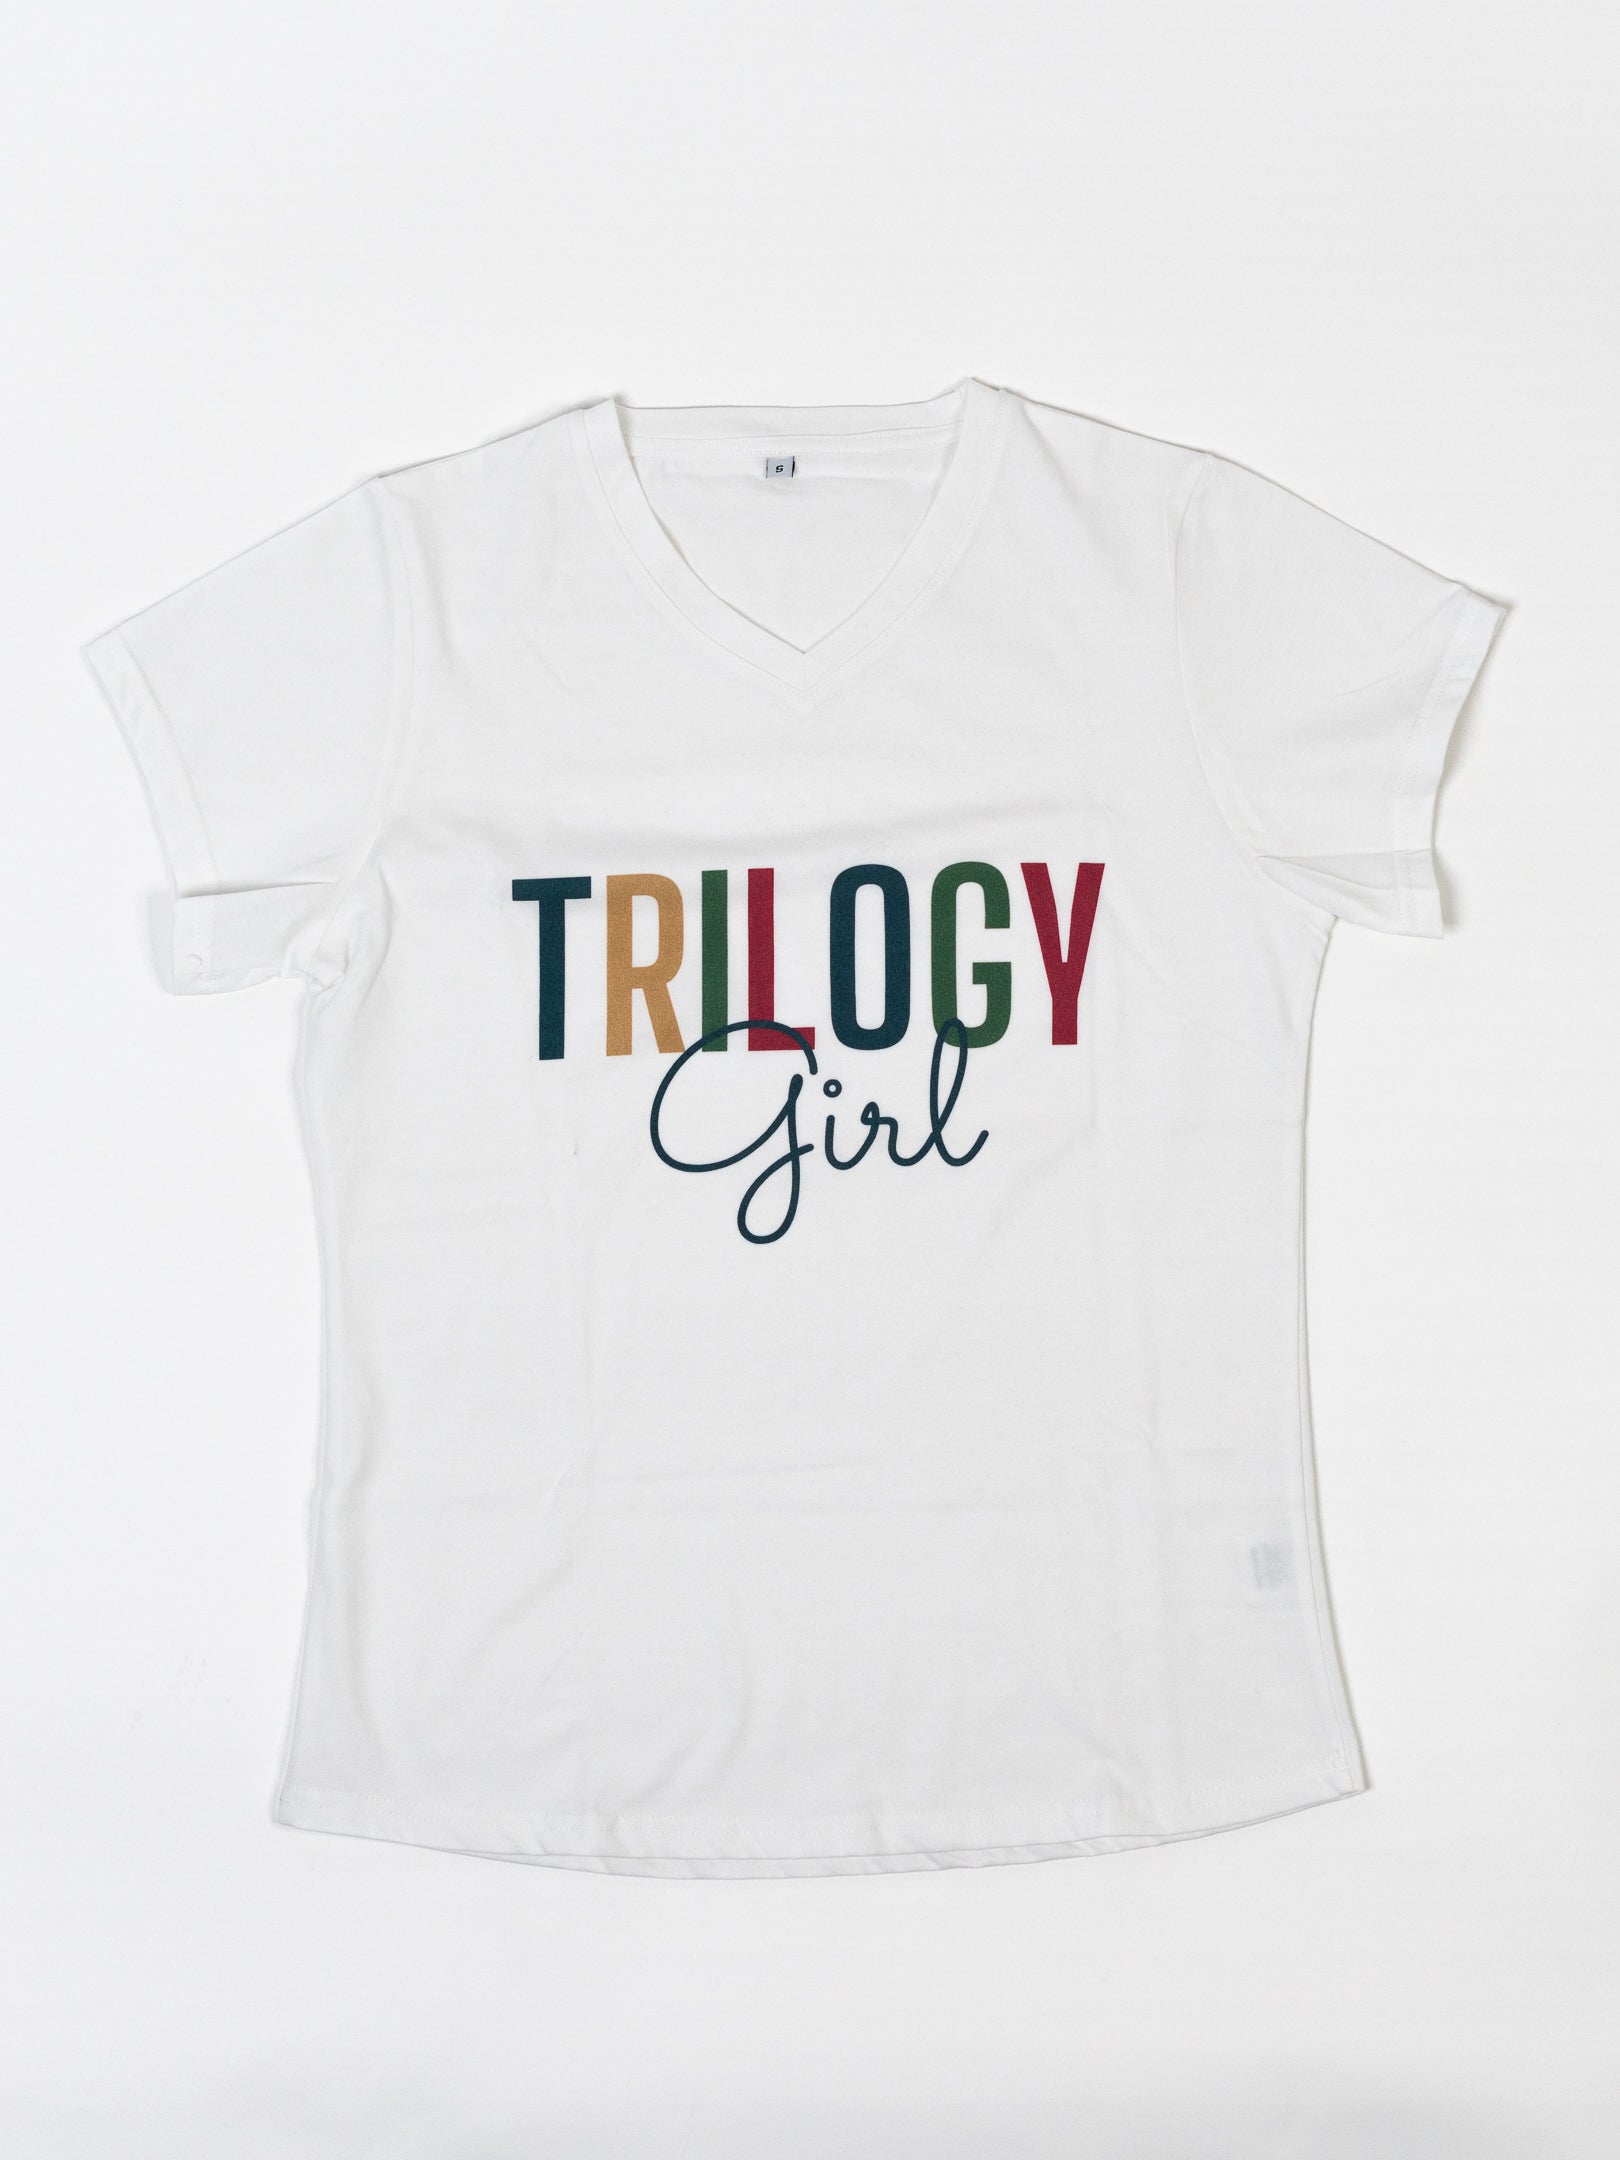 Trilogy Girl Tee